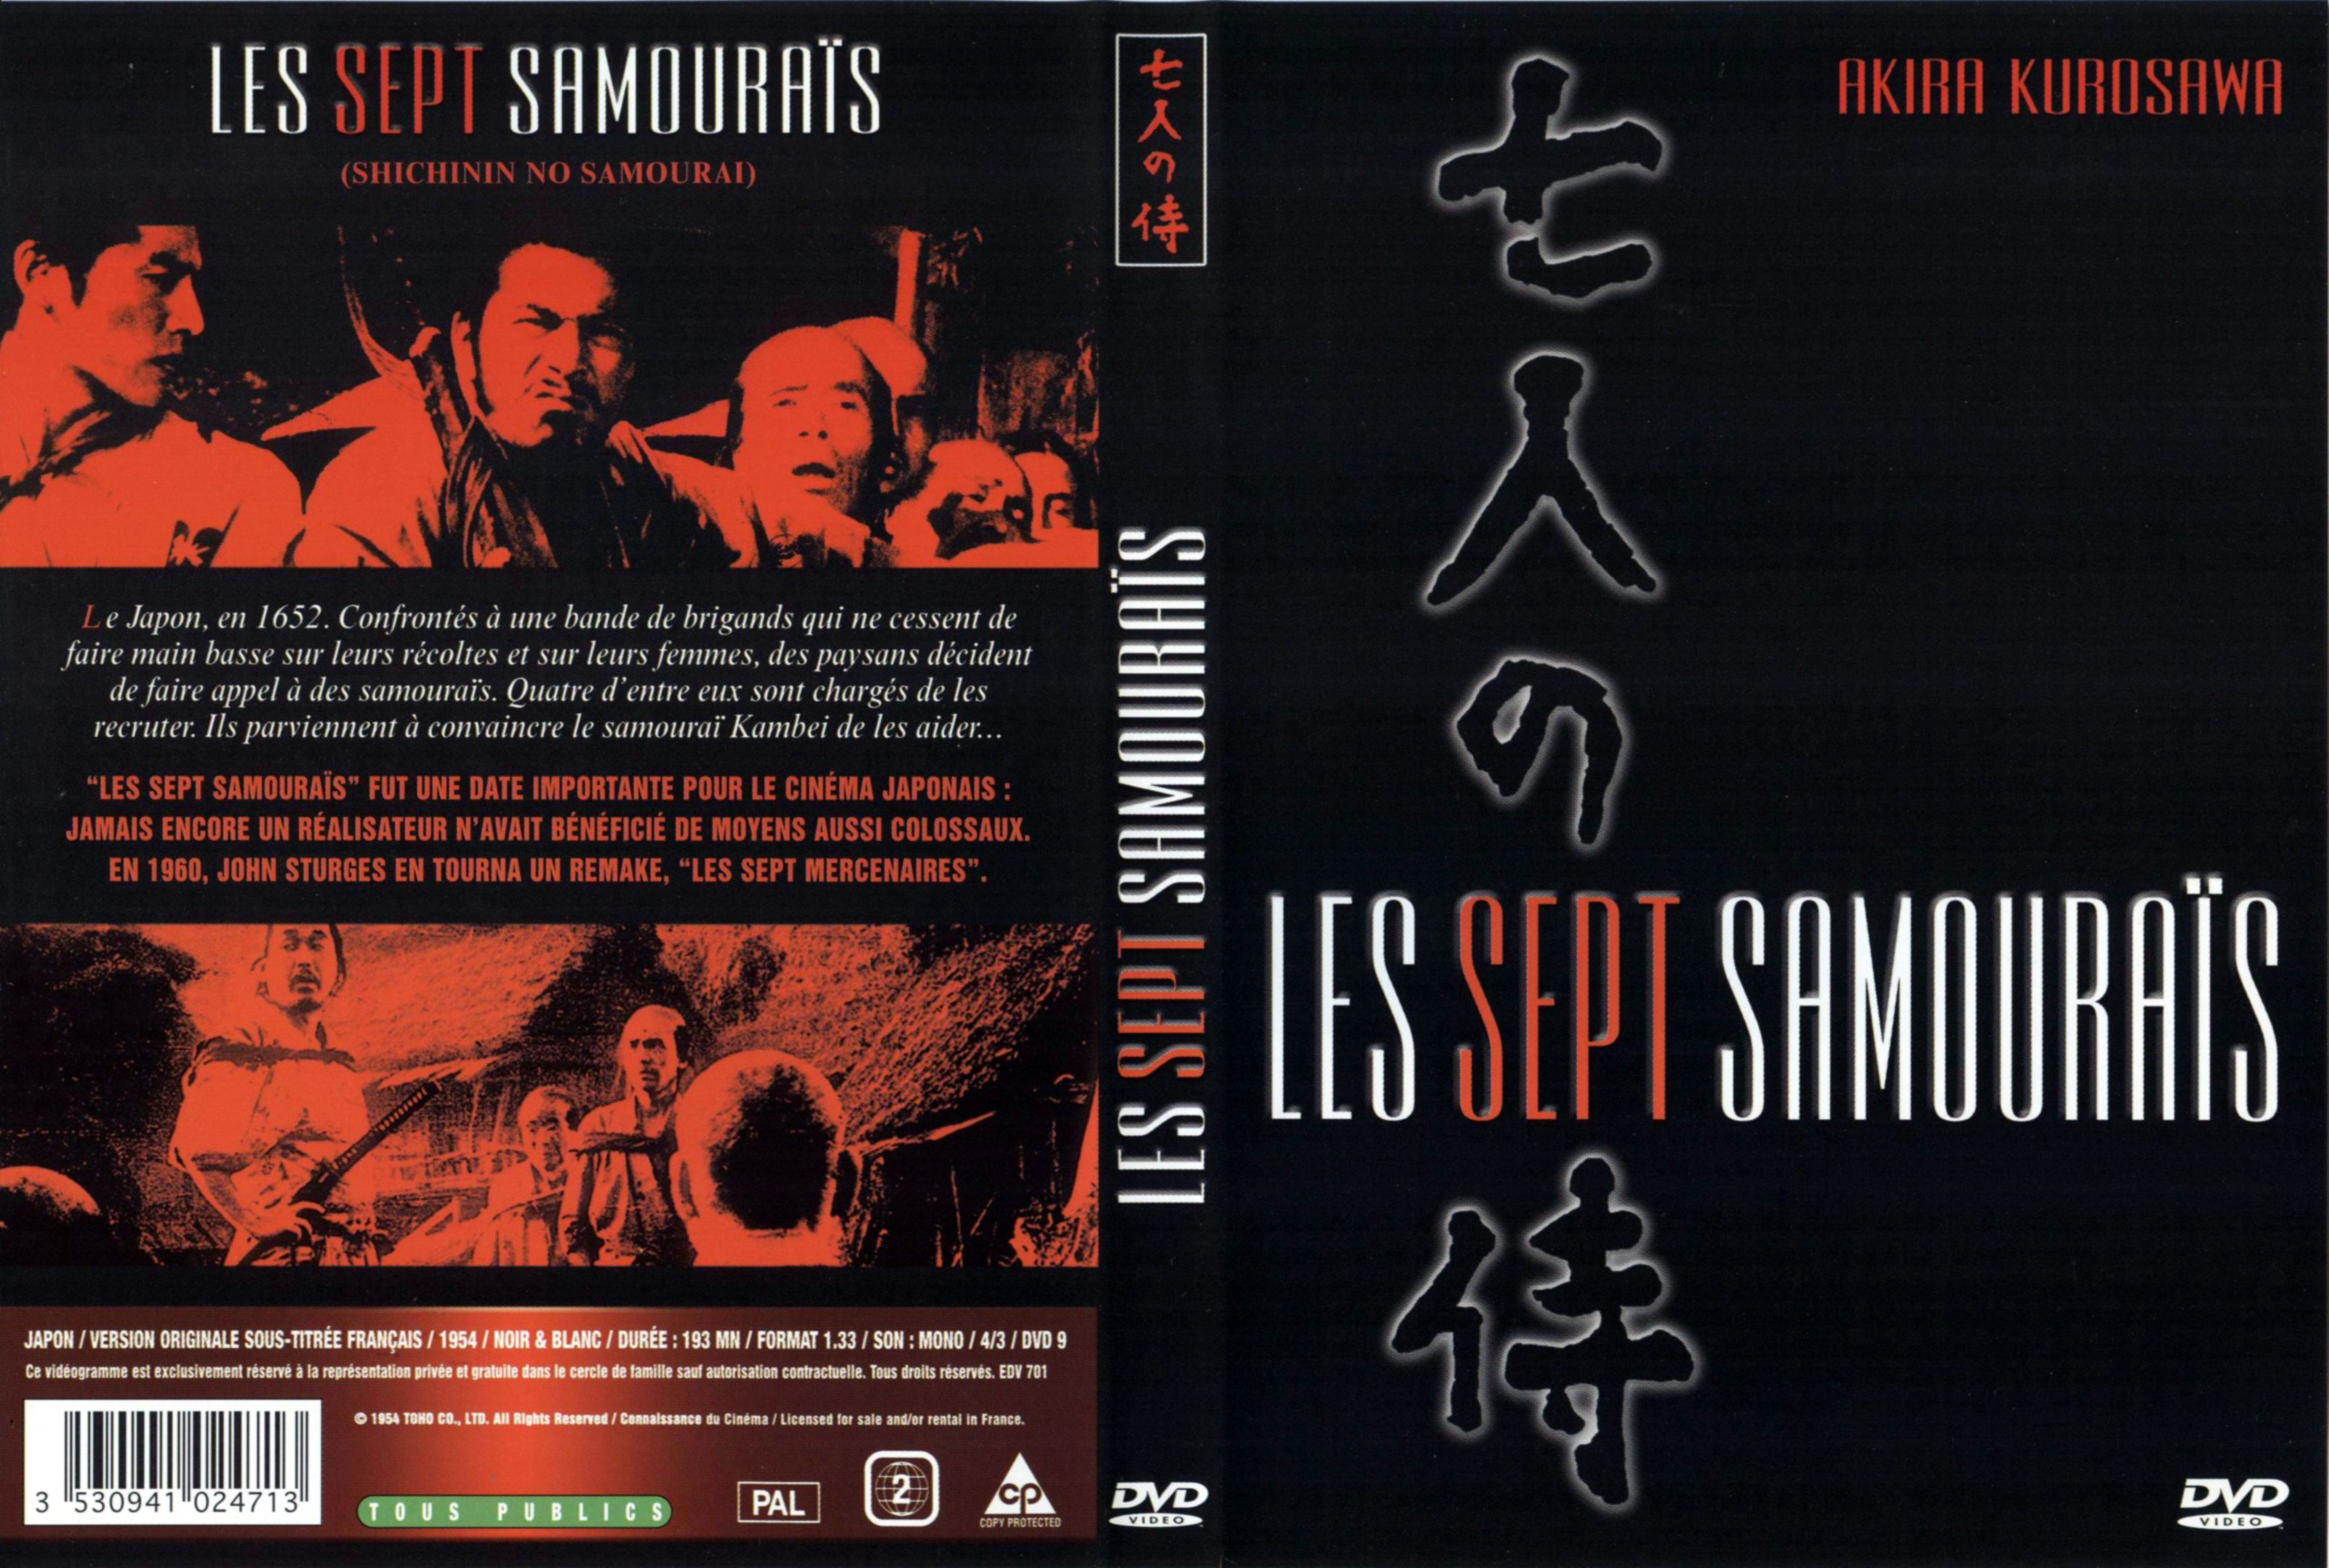 Jaquette DVD Les sept samourais v2